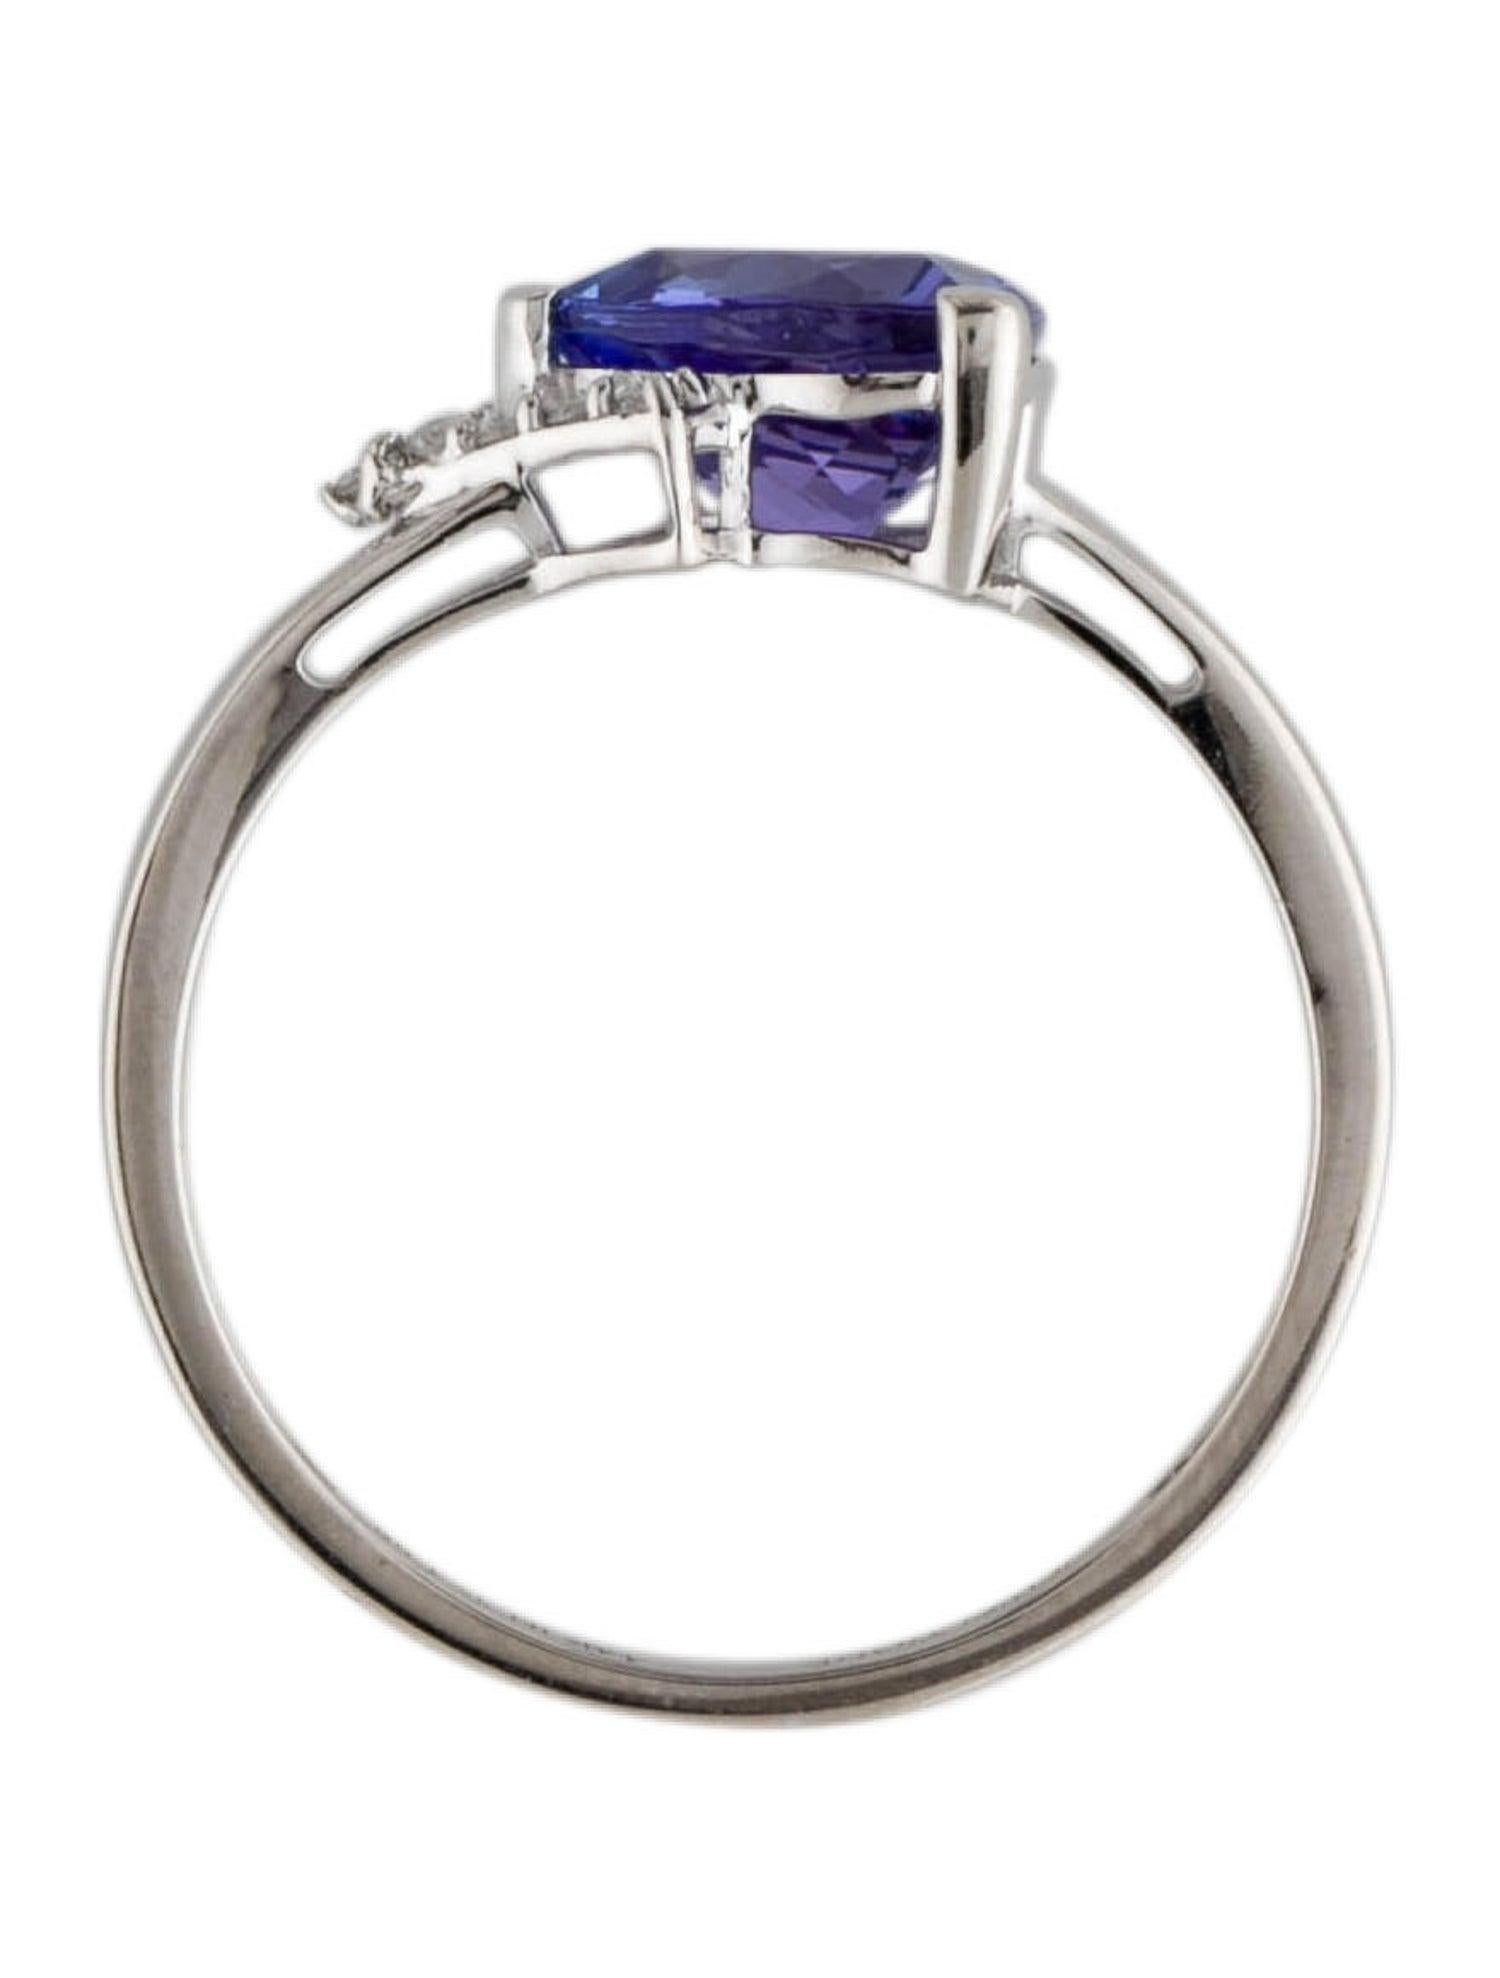 Women's Luxurious 14K Tanzanite & Diamond Cocktail Ring, Size 7.25 - Statement Jewelry For Sale